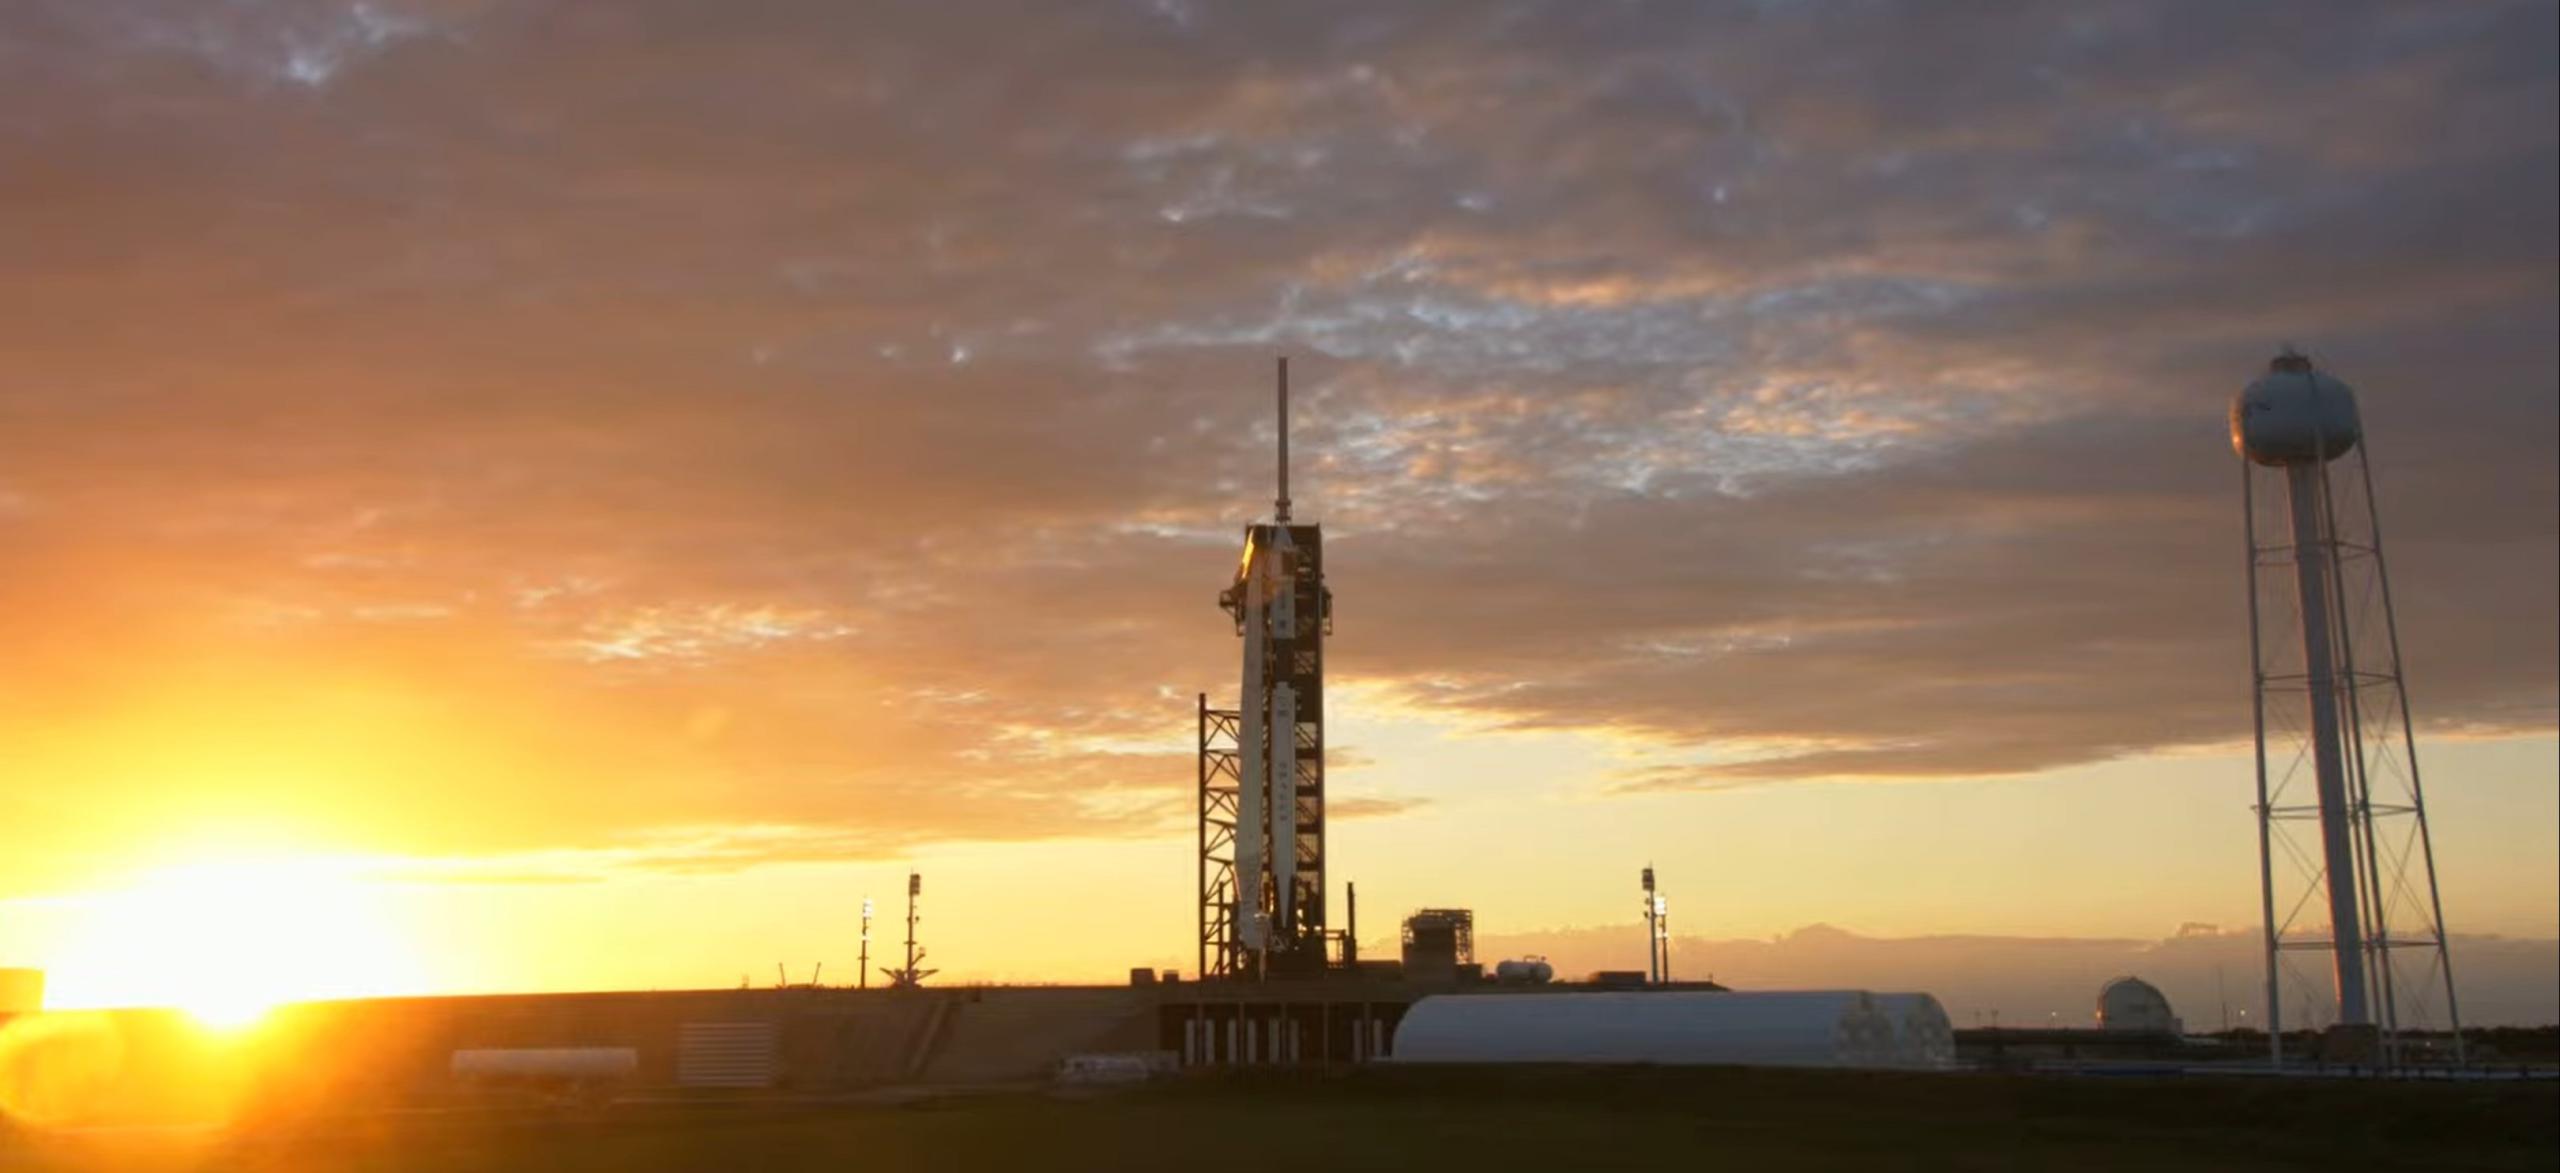 Crew-1 Crew Dragon C207 Falcon 9 B1061 webcast 111520 (NASA) sunset 1 (c)